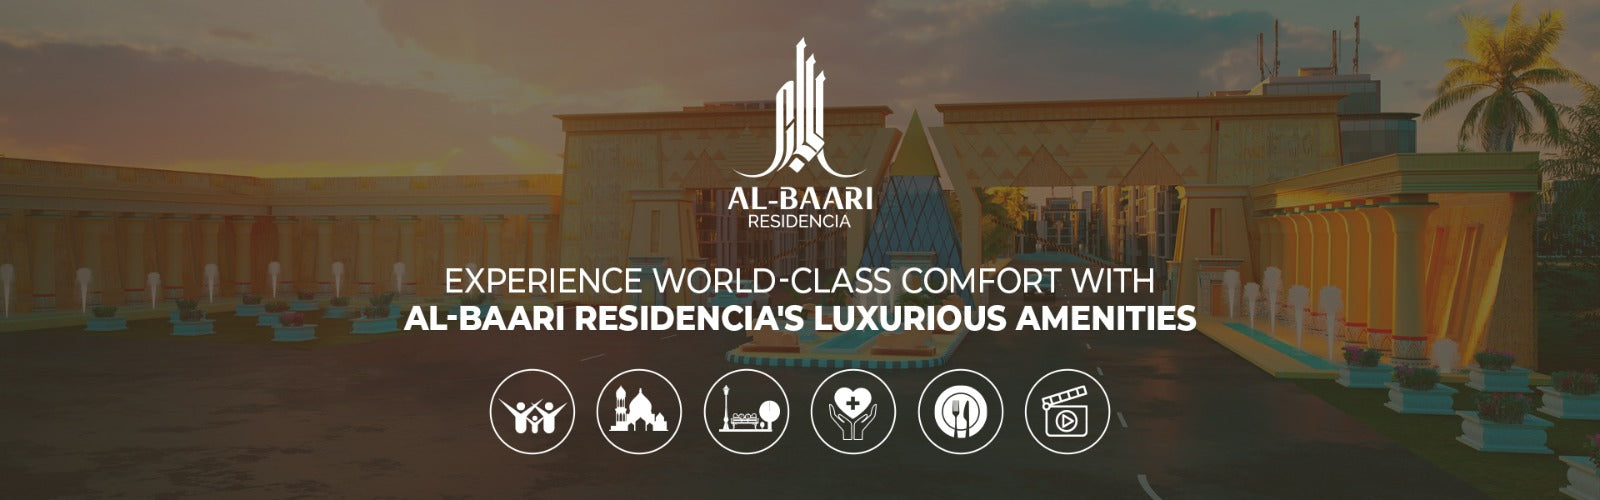 Experience World-Class Comfort with Al-Baari Residencia's Luxurious Amenities